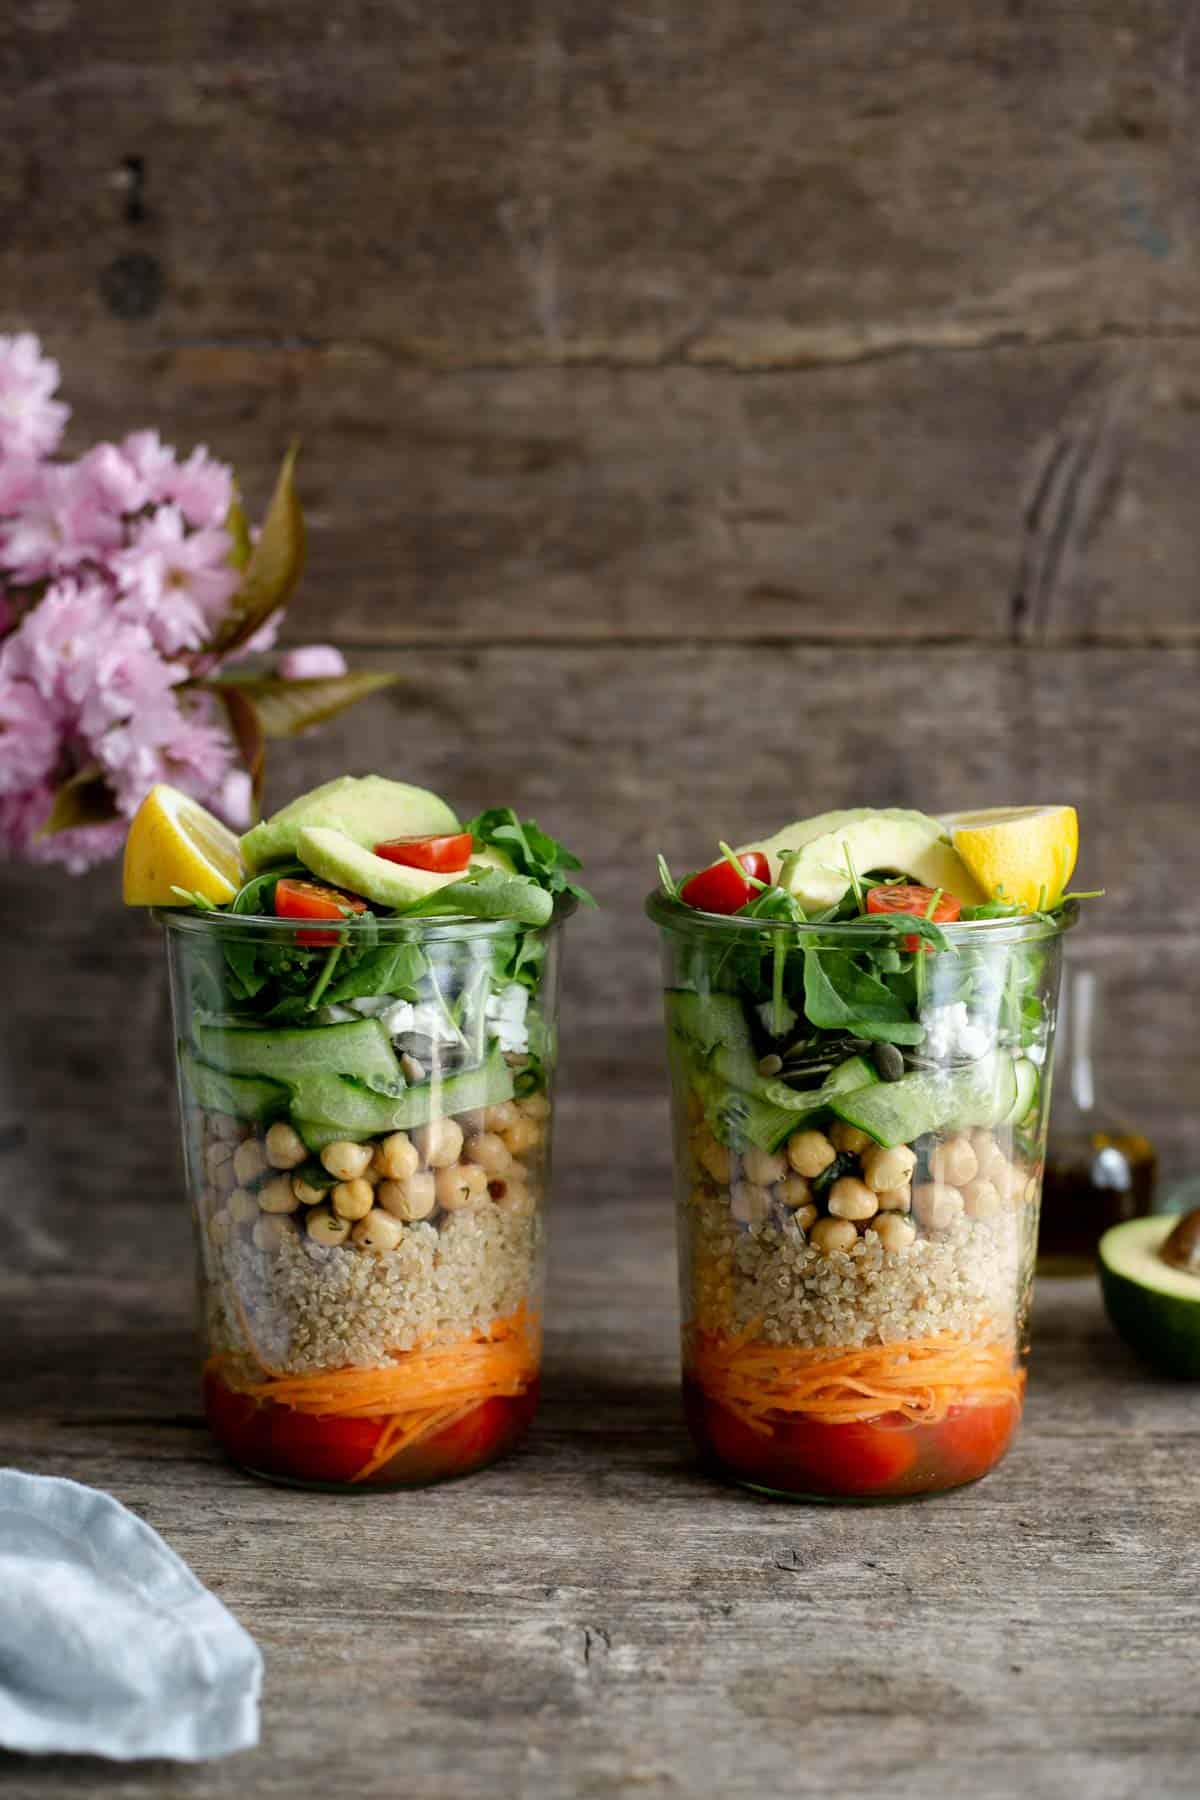 Tomato and quinoa salad jars. Easy and fun way to prepare your work lunch! #dairyfree #mealprep #saladjar | via @annabanana.co